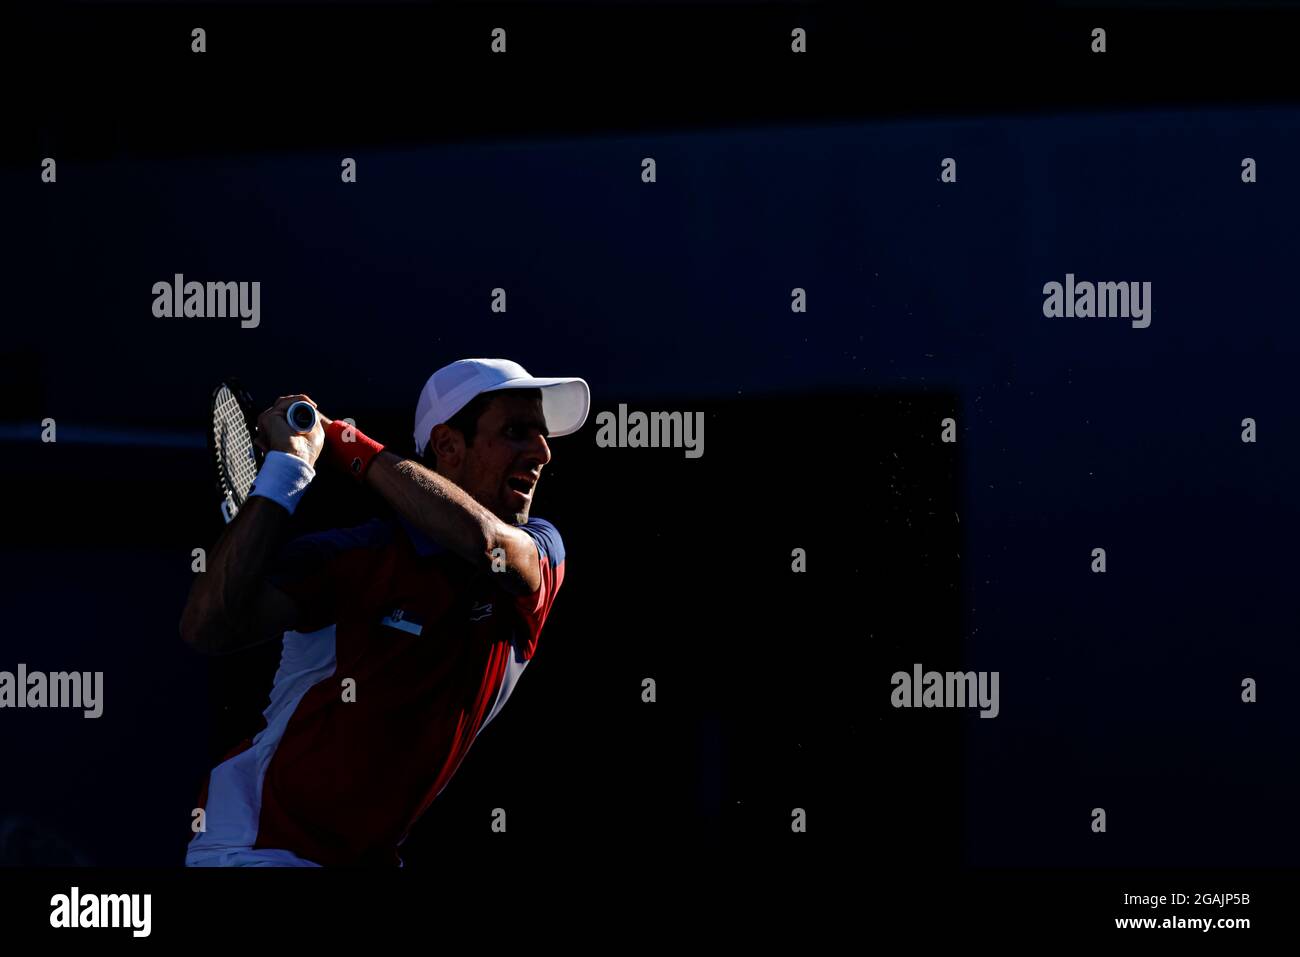 Tokyo, Giappone. 31 luglio 2021. Olimpiadi: Partita di tennis tra Novak Djokovic e Pablo Carreño all'Ariake Arena in Giappone. © ABEL F. ROS / Alamy Live News Foto Stock